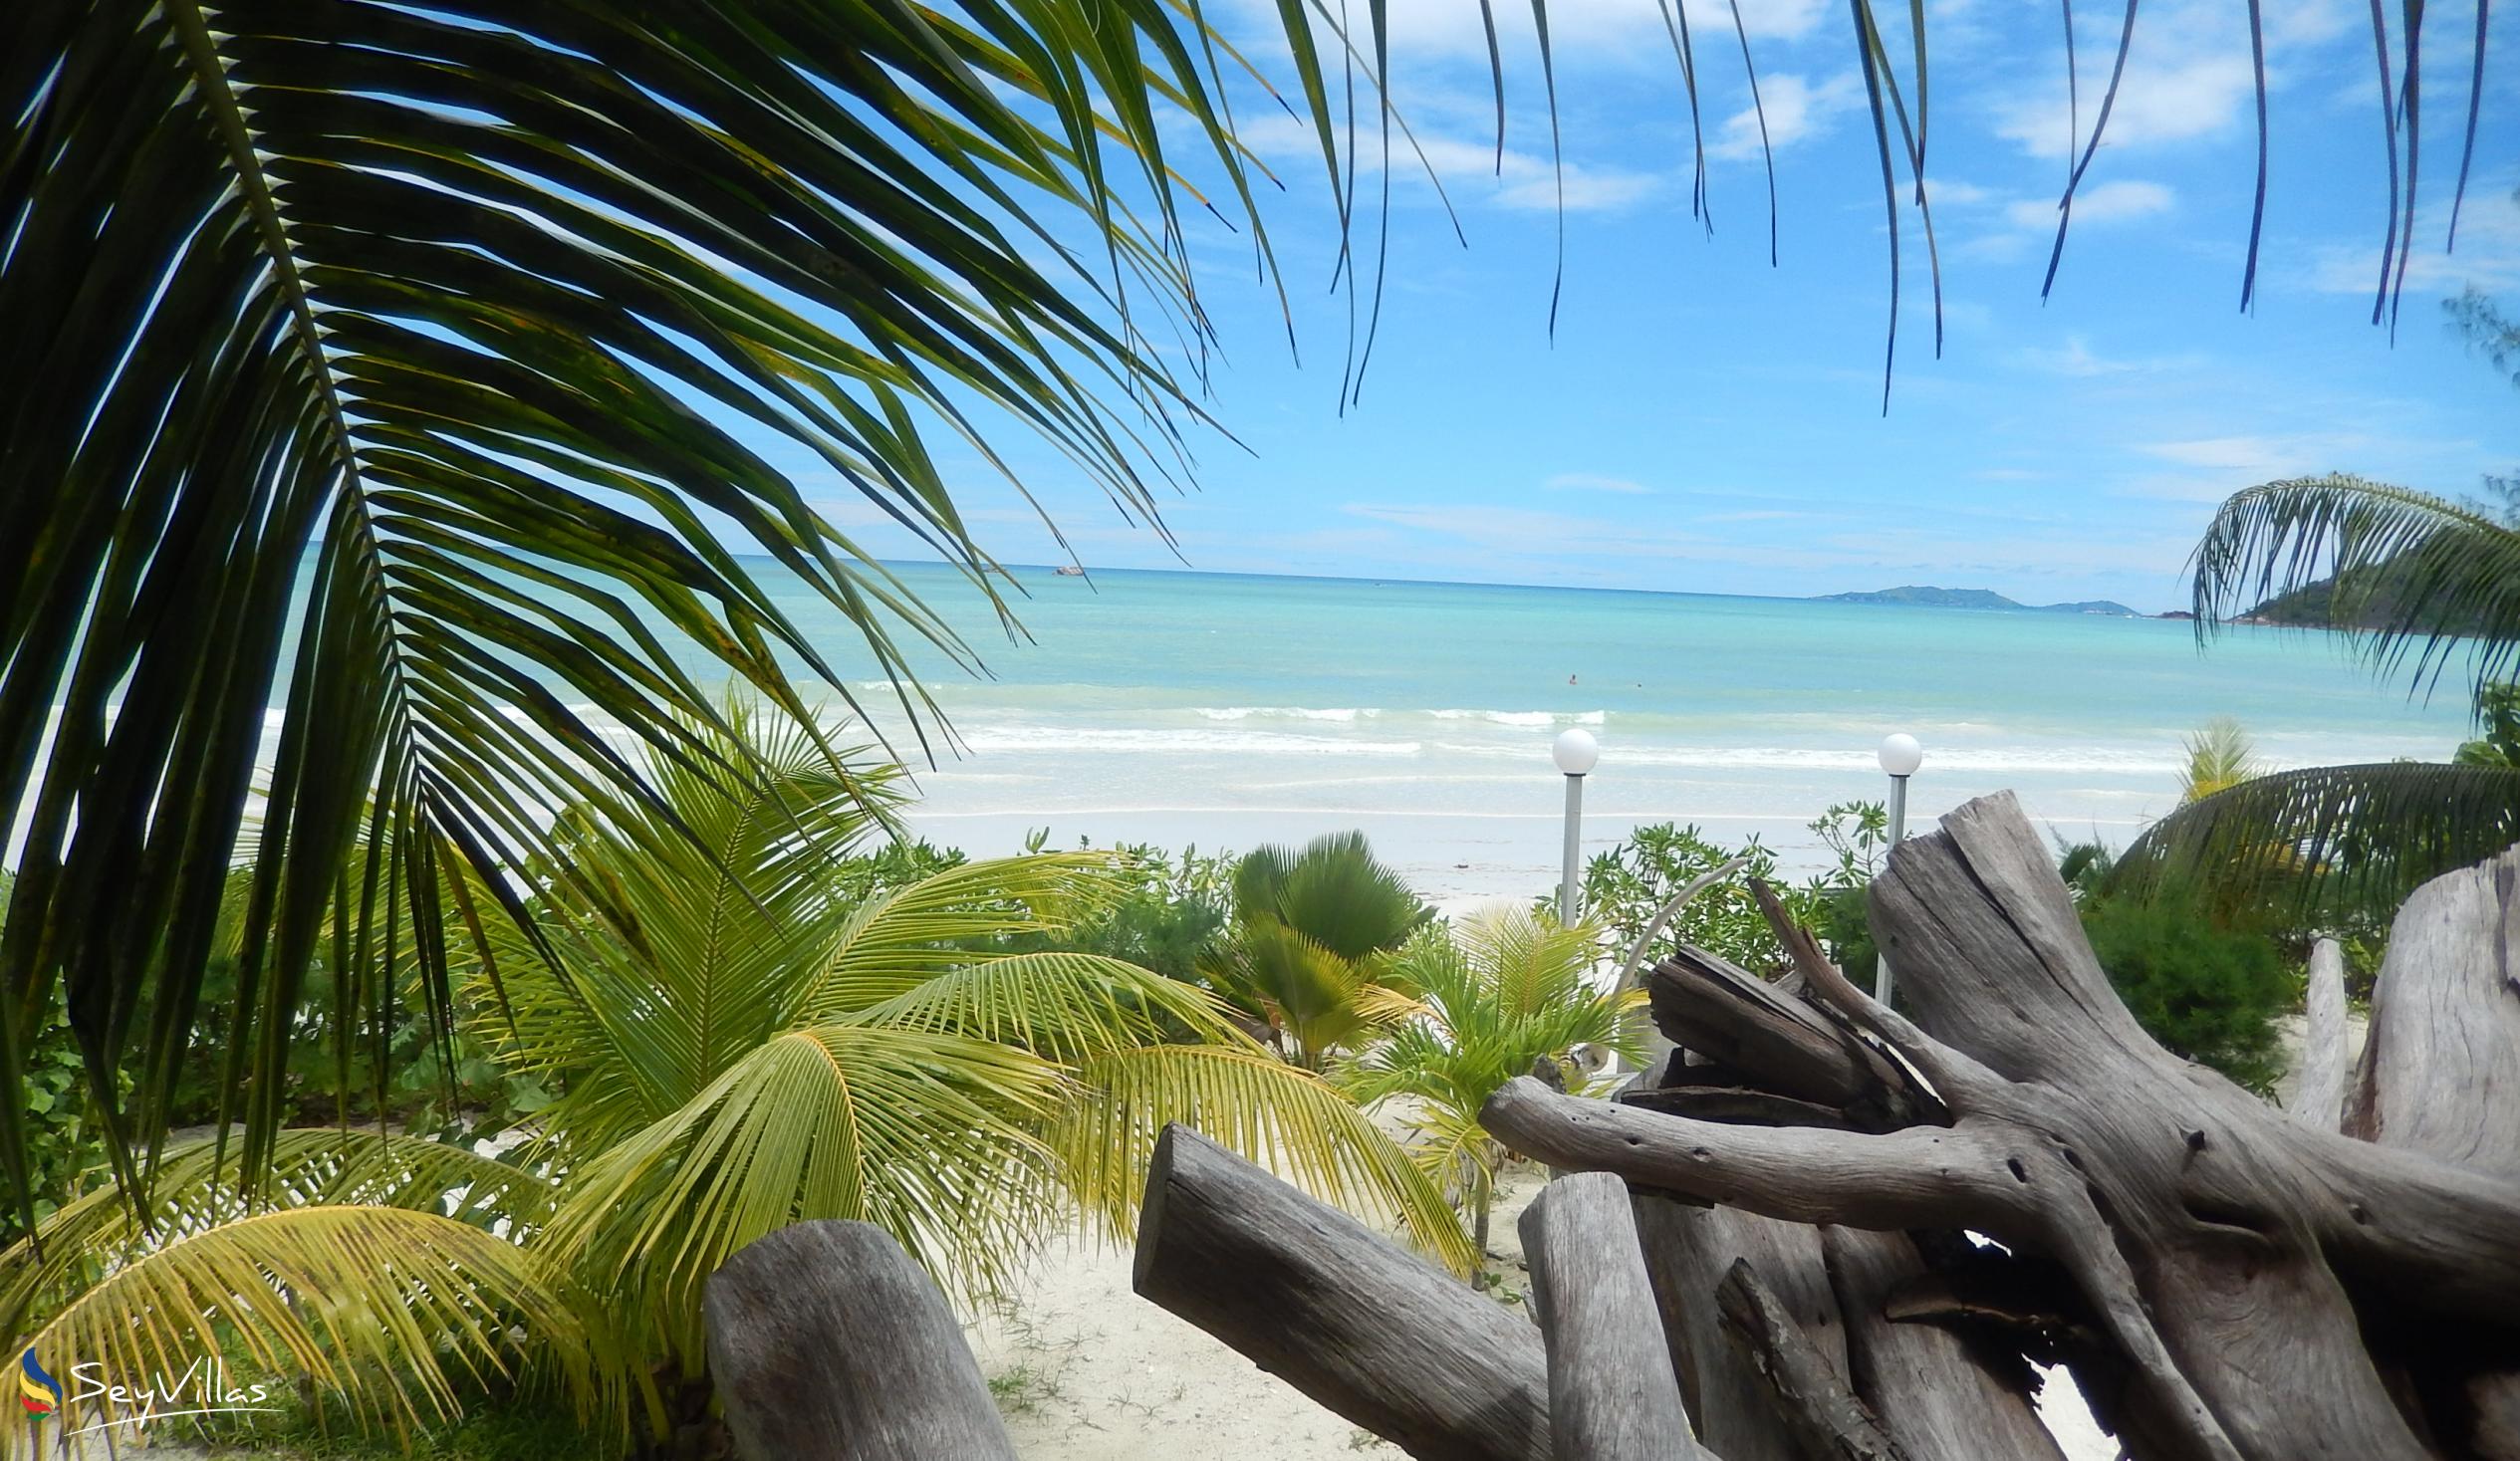 Photo 105: Cote d'Or Footprints - Beaches - Praslin (Seychelles)